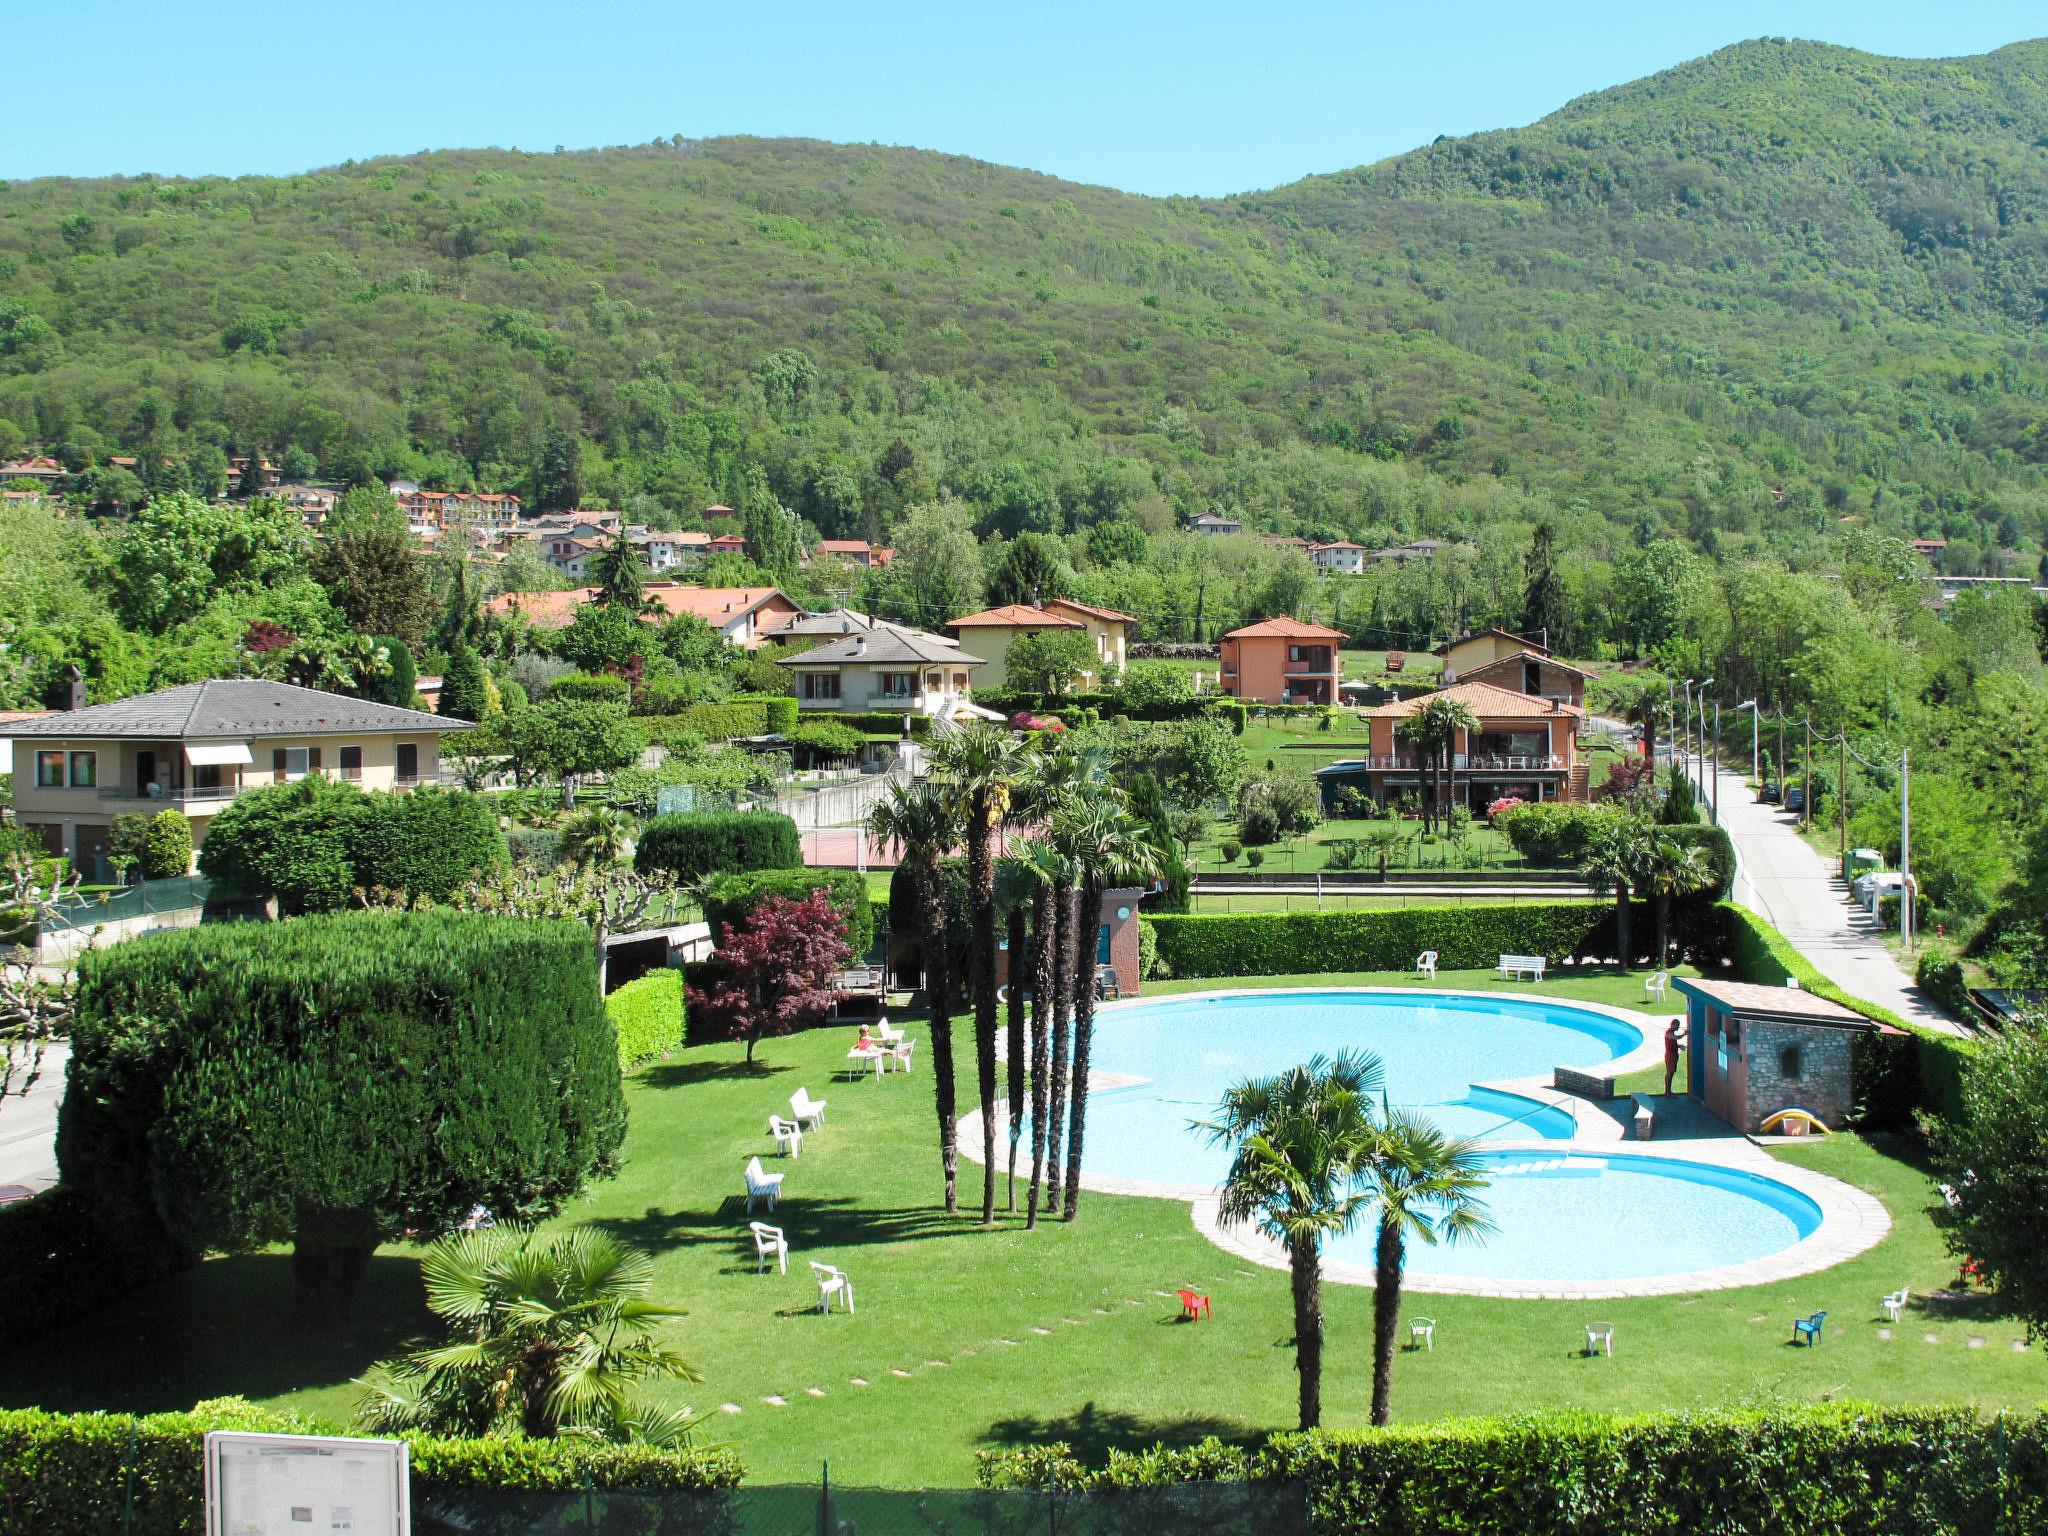 Foto 2 - Apartment in Brezzo di Bedero mit schwimmbad und blick auf die berge